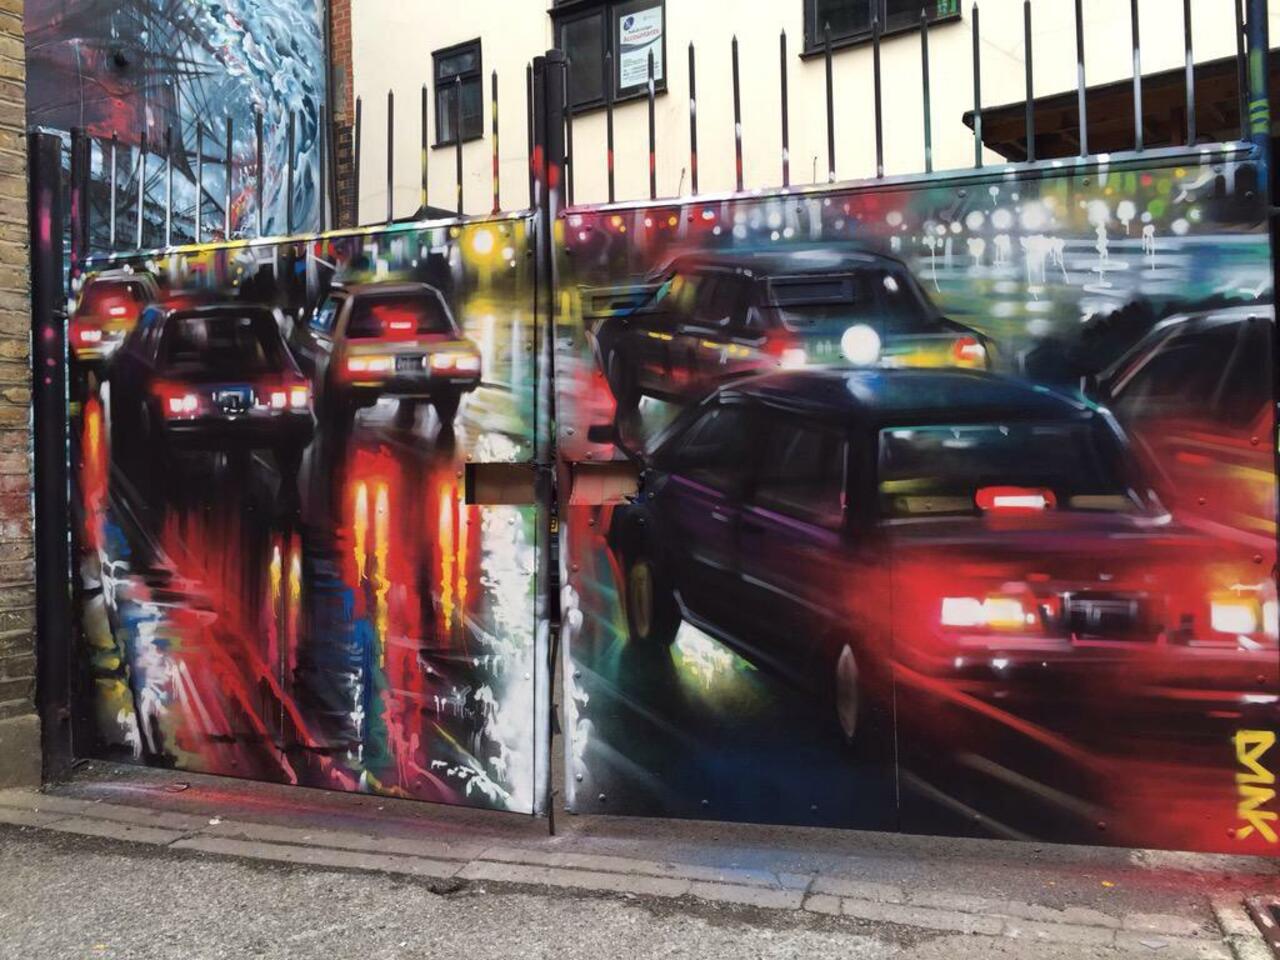 RT @artlife365: New Street Art by DanKitchener in Brick Lane London 

#art #graffiti #mural #streetart http://t.co/LMLKWbMr4w